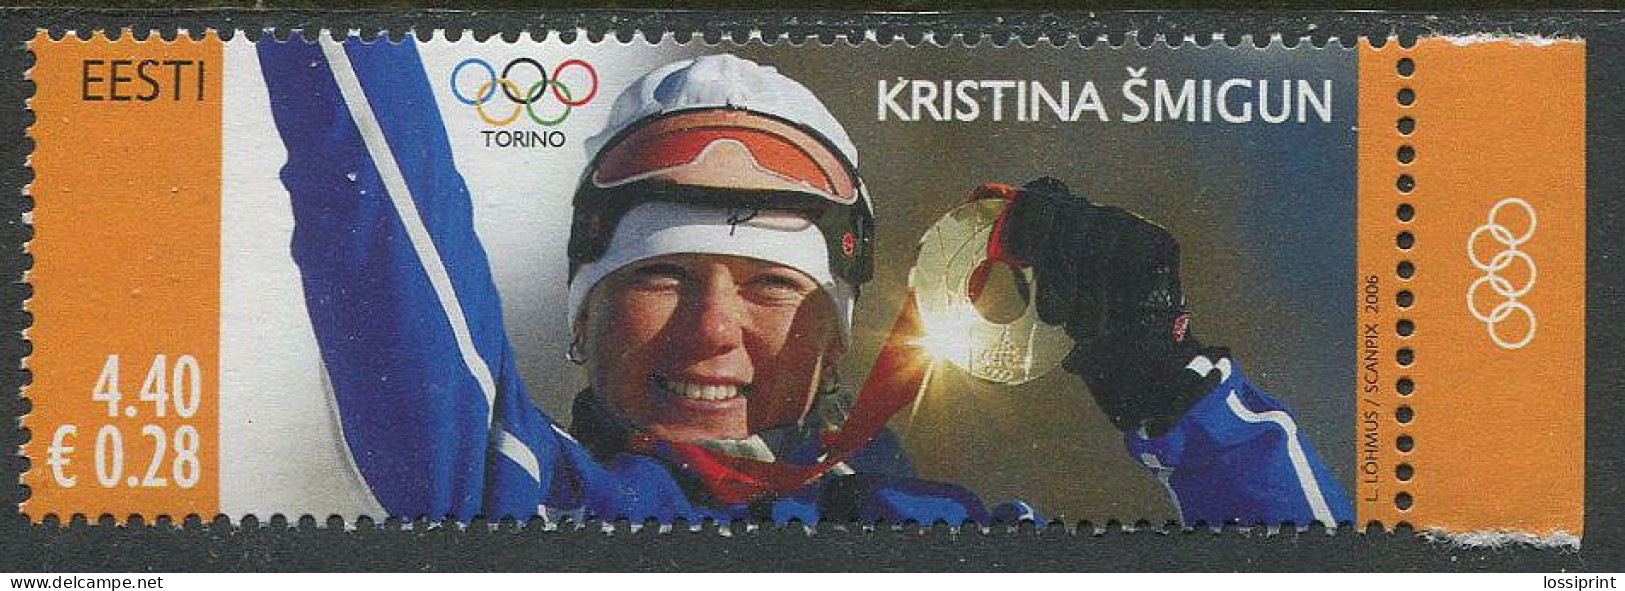 Estonia:Unused Stamp Torino Olympic Games, Olympic Champion Kristiina Šmigun, 2006, MNH - Winter 2006: Turin